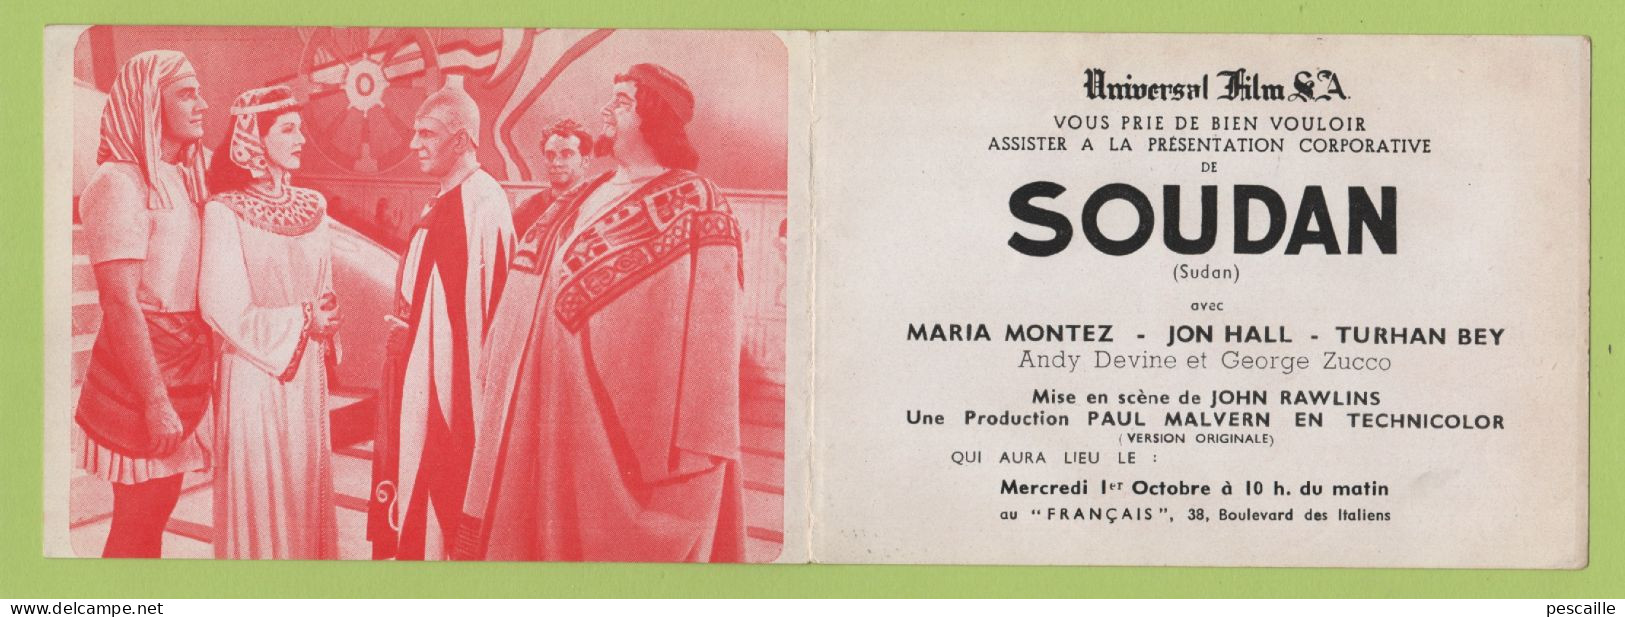 1945 ? - INVITATION UNIVERSAL FILM S.A. A LA PROJECTION DU FILM SOUDAN SUDAN AVEC MARIA MONTEZ JON HALL TURHAN BEY ... - Pubblicitari